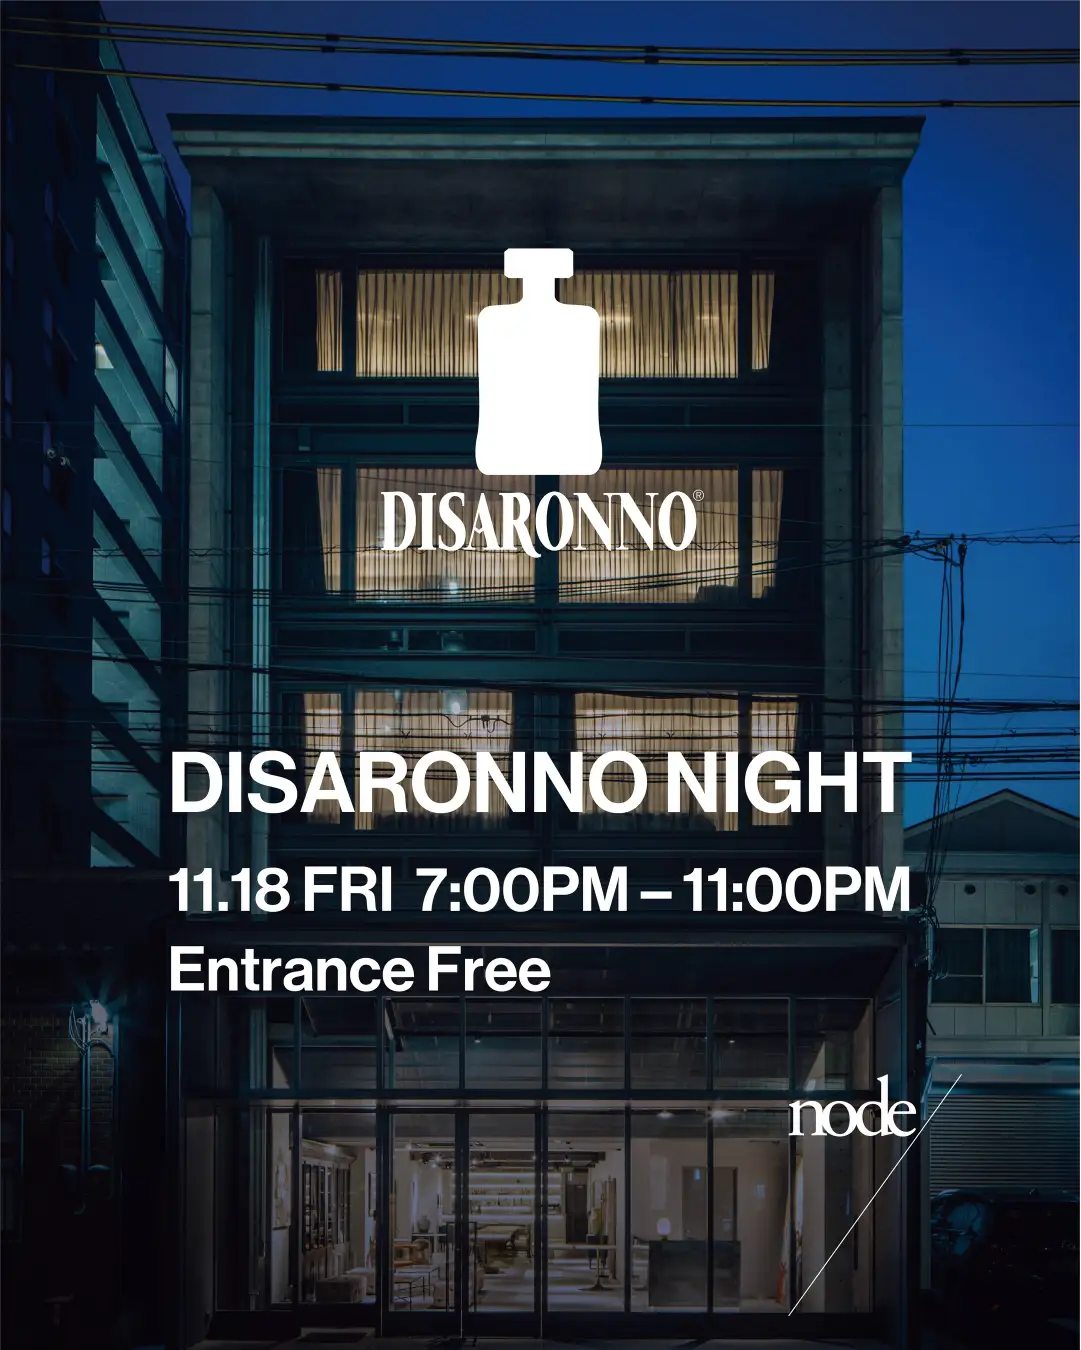 Disaronno x node hotel – DISARONNO NIGHT